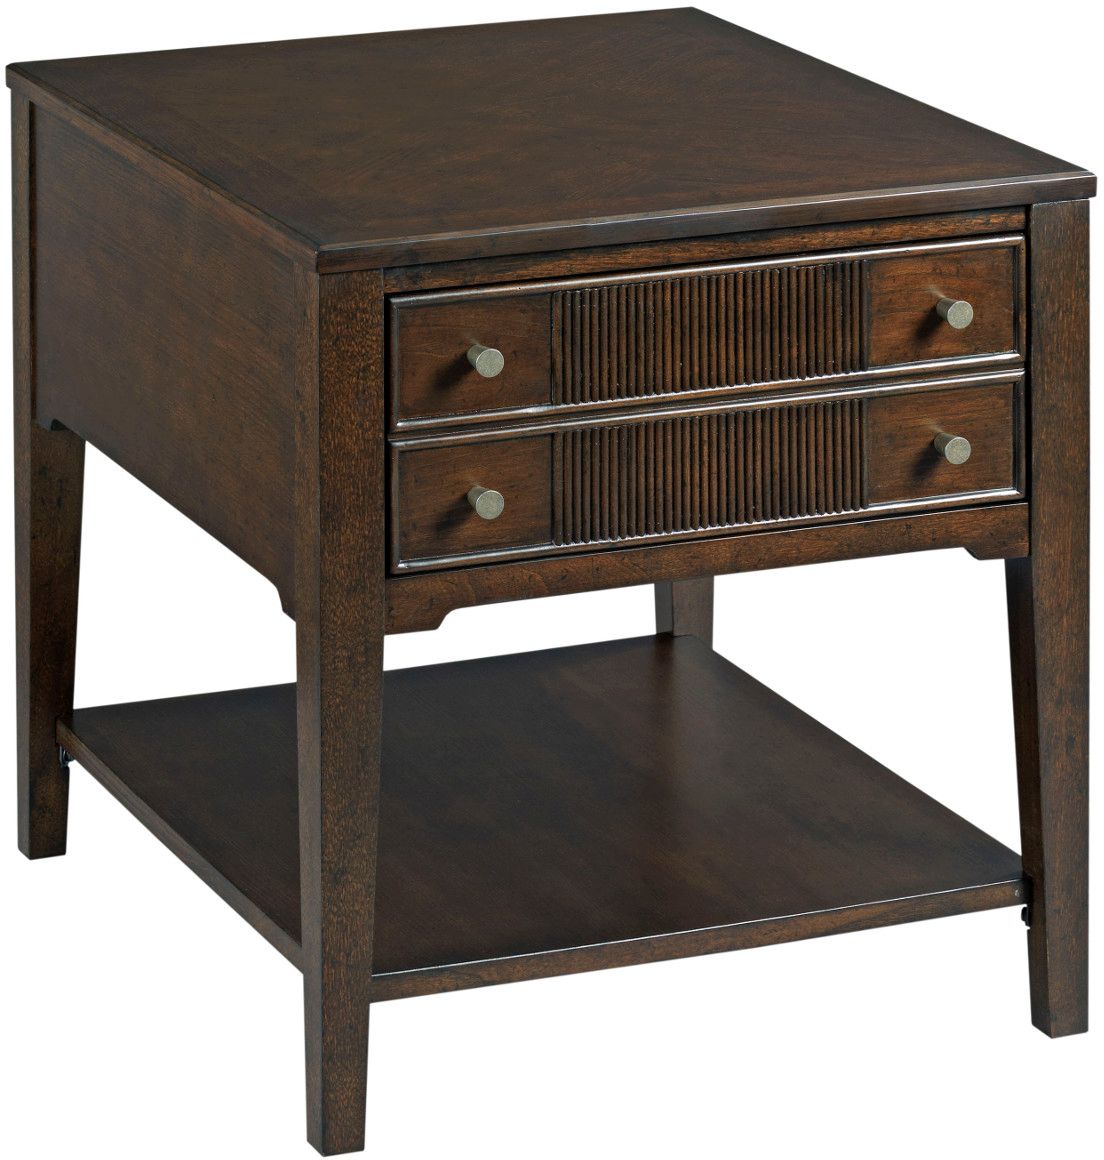 England Furniture Mercato Rectangular Drawer End Table